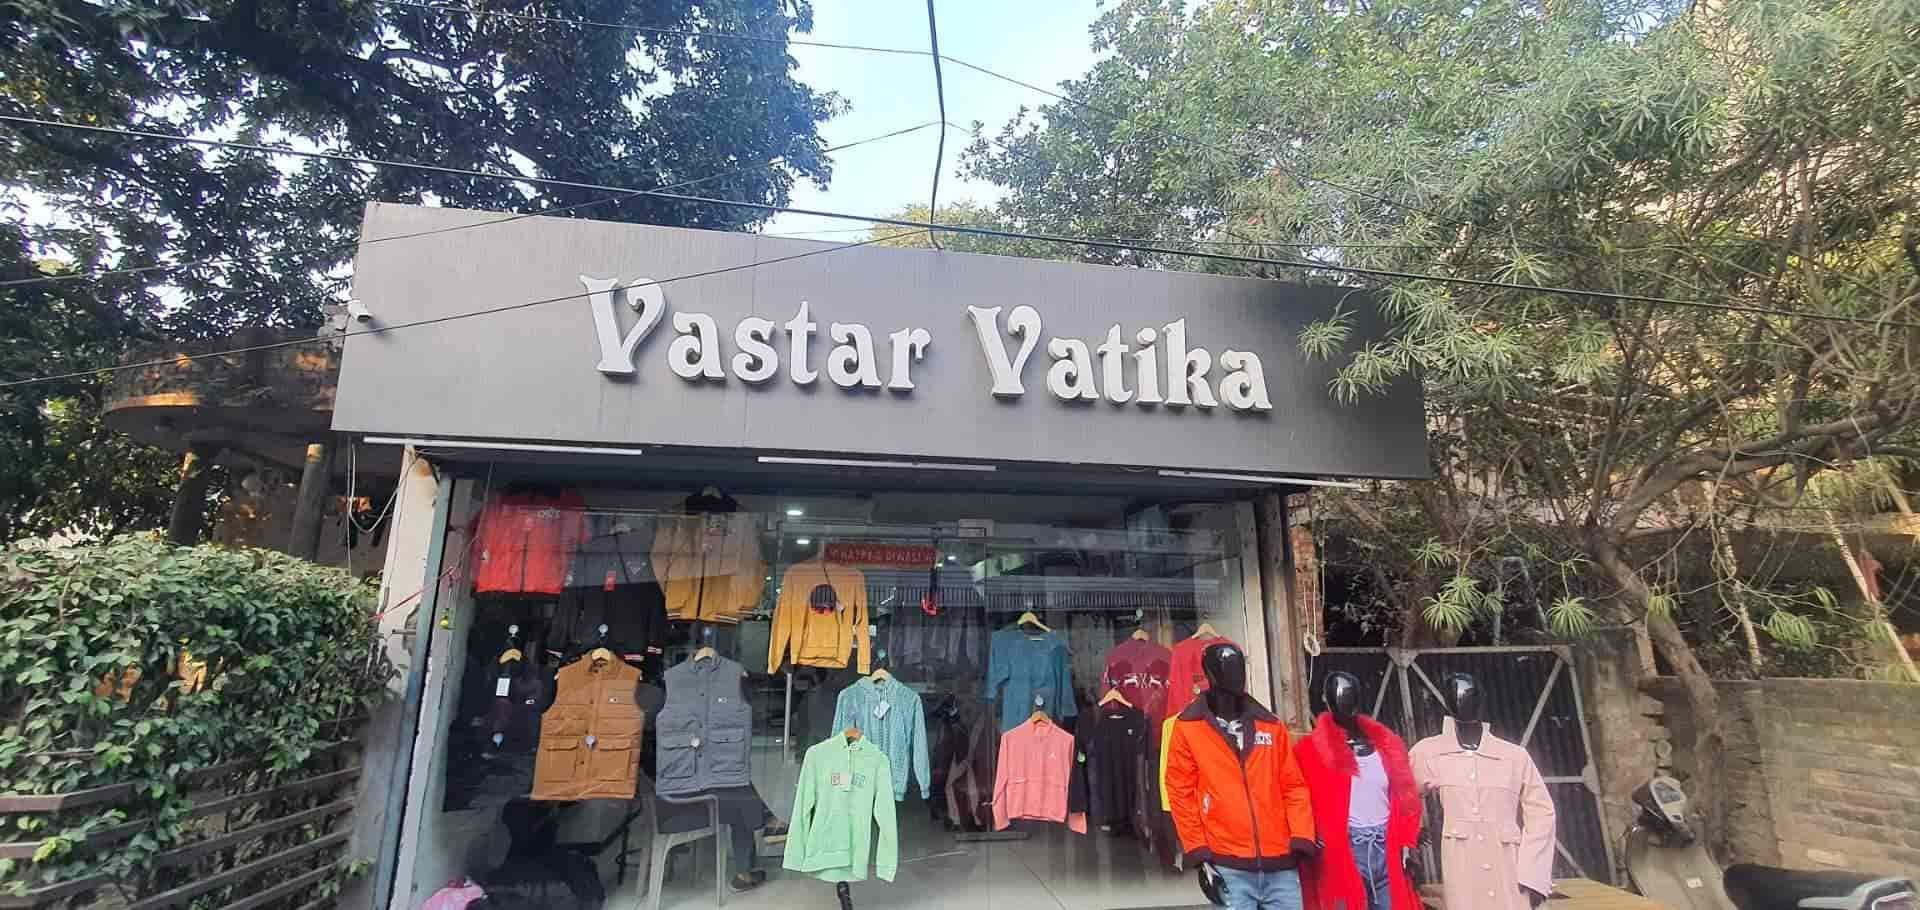 19434vastar-vatika-civil-lines-ludhiana-readymade-garment-retailers-fdbbm71ene.jpg